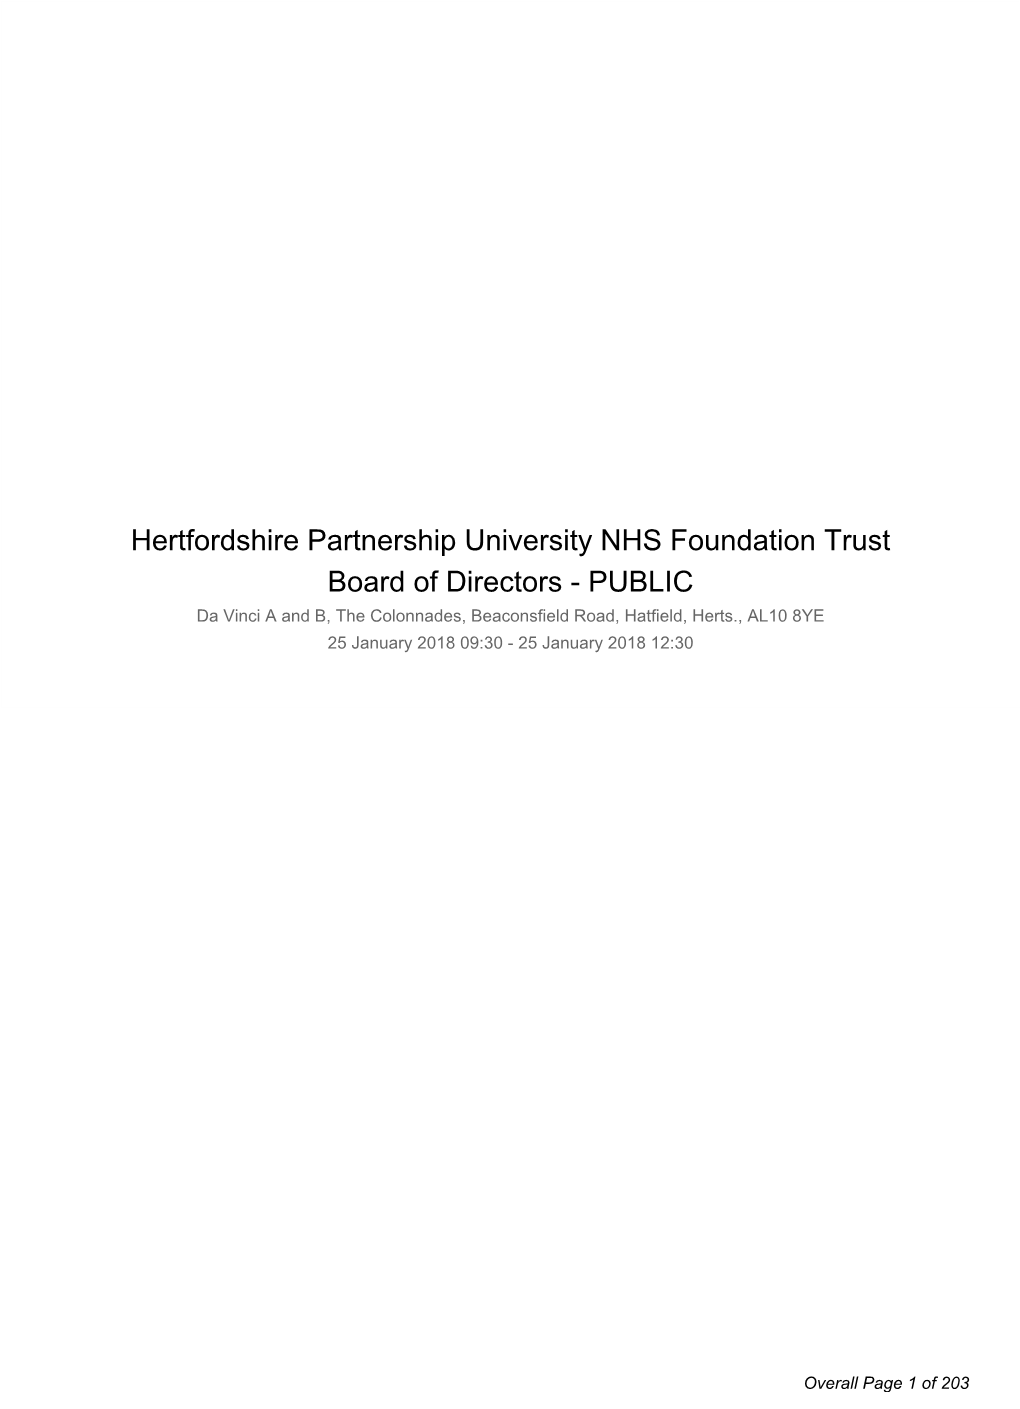 Hertfordshire Partnership University NHS Foundation Trust Board of Directors